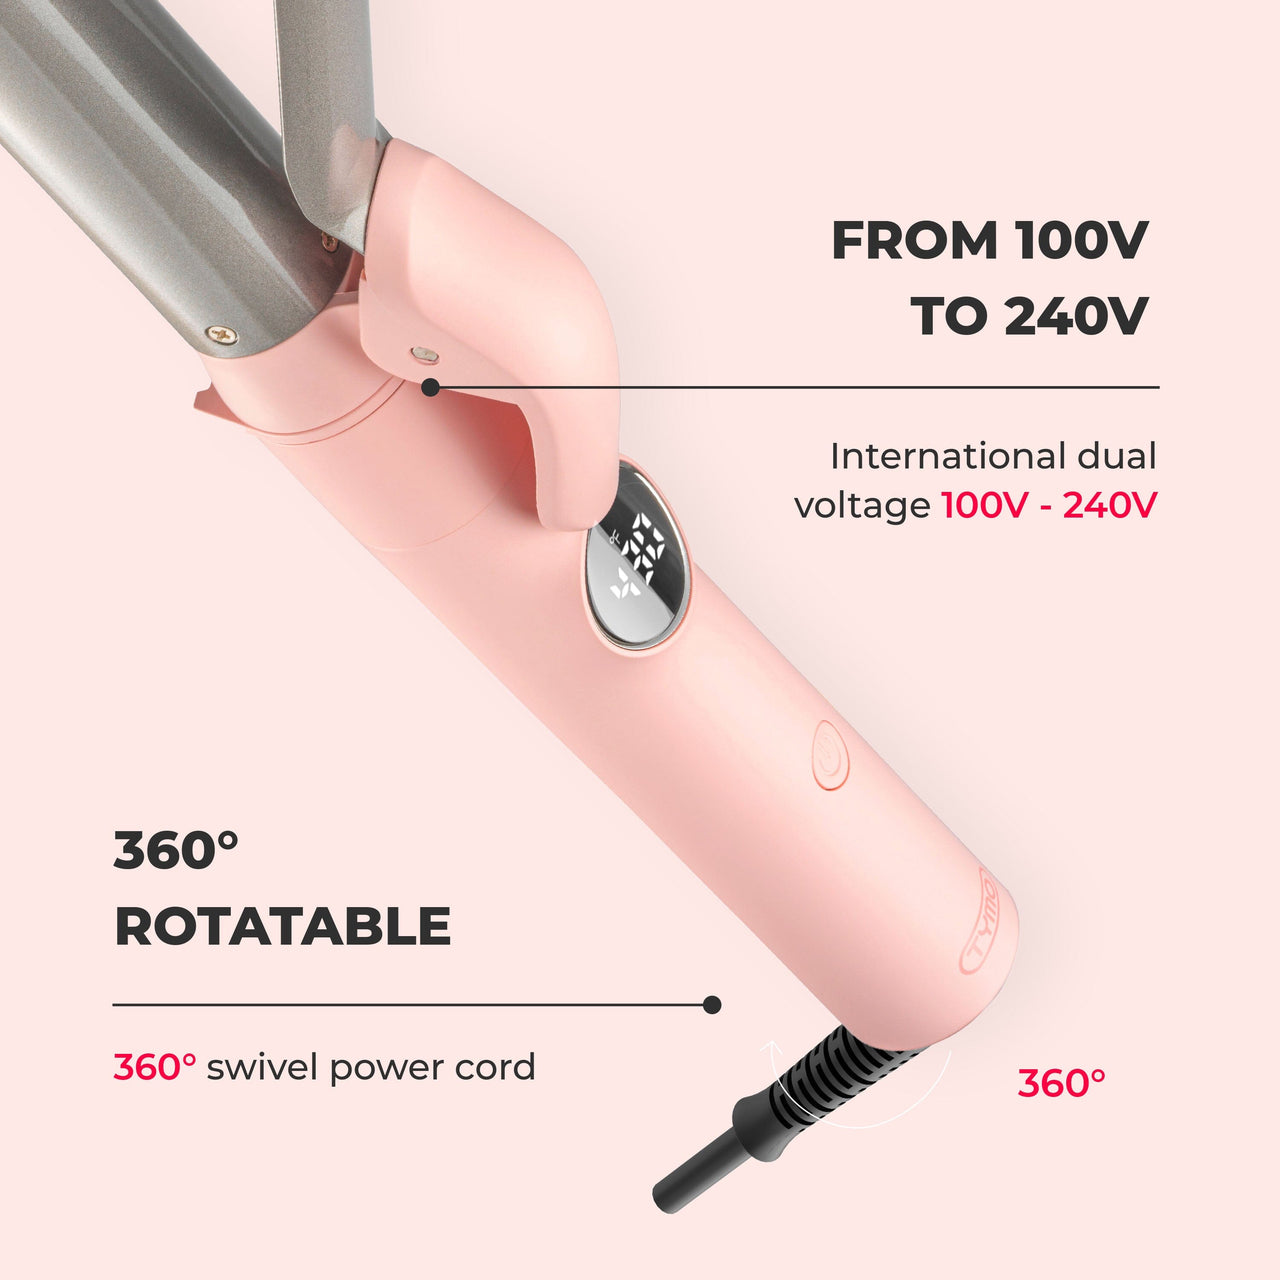 Tymo Beauty Hair Curlers TYMO Cues Pink